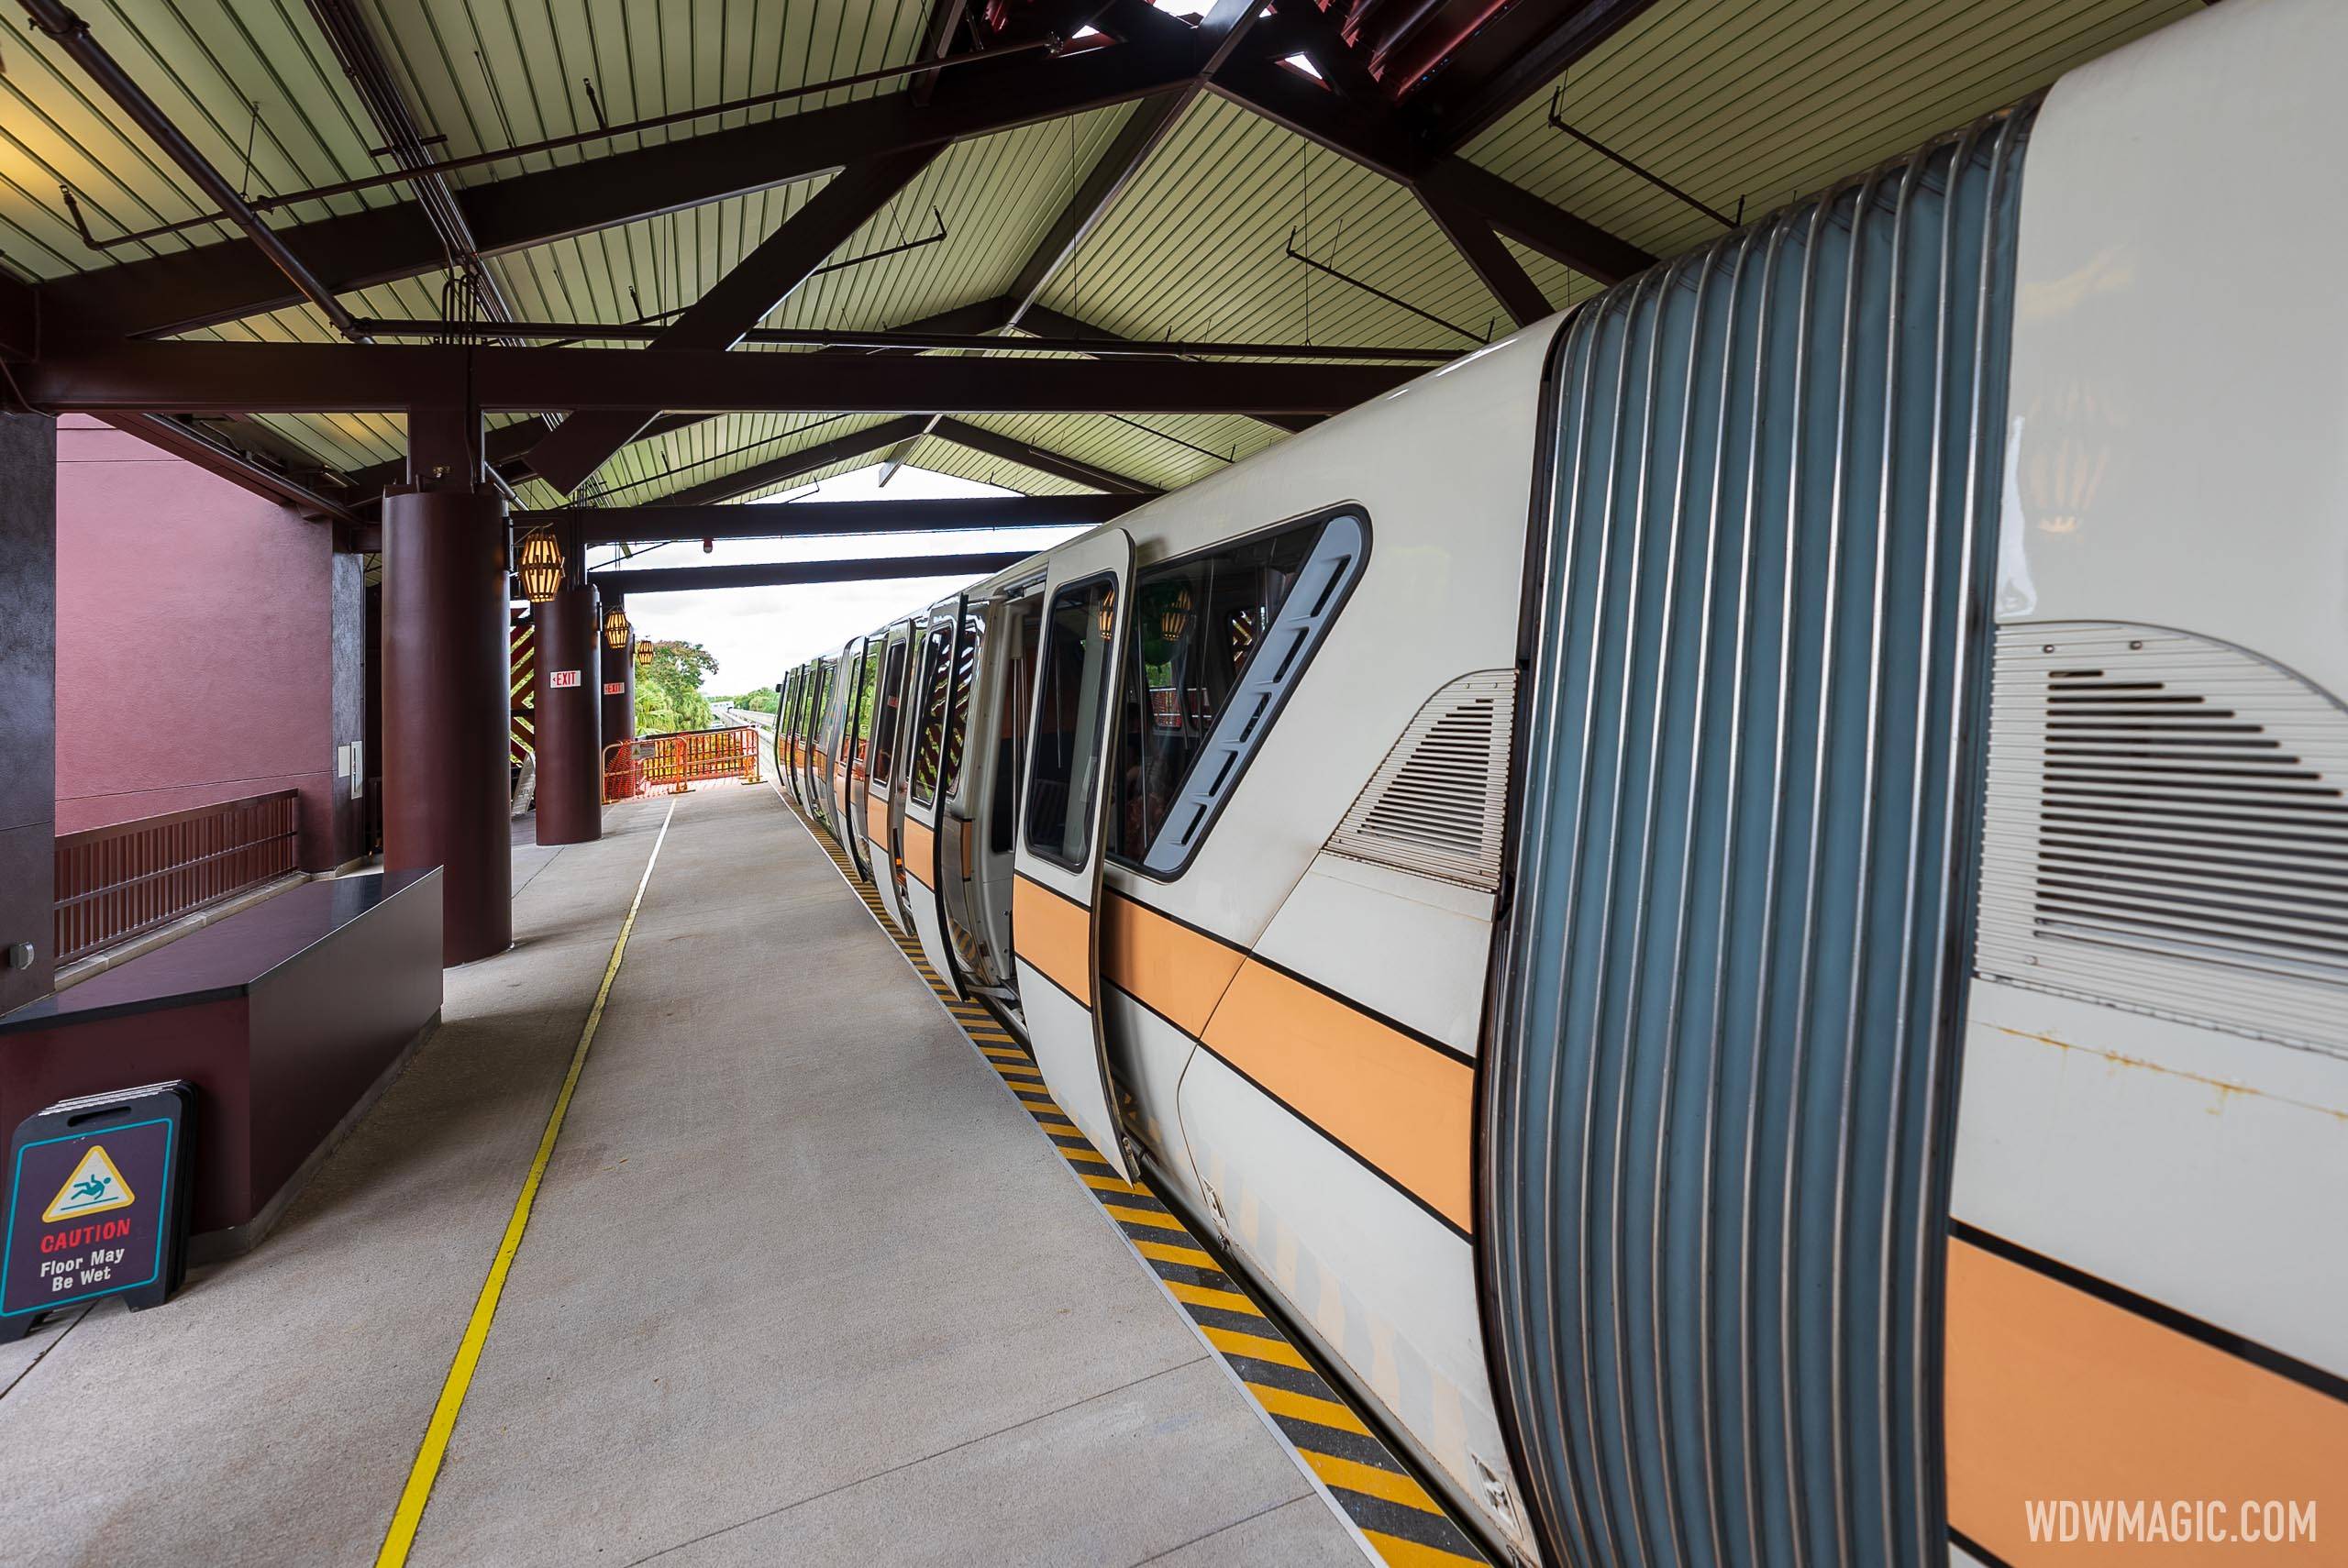 The monorail station platform at Disney's Polynesian Resort